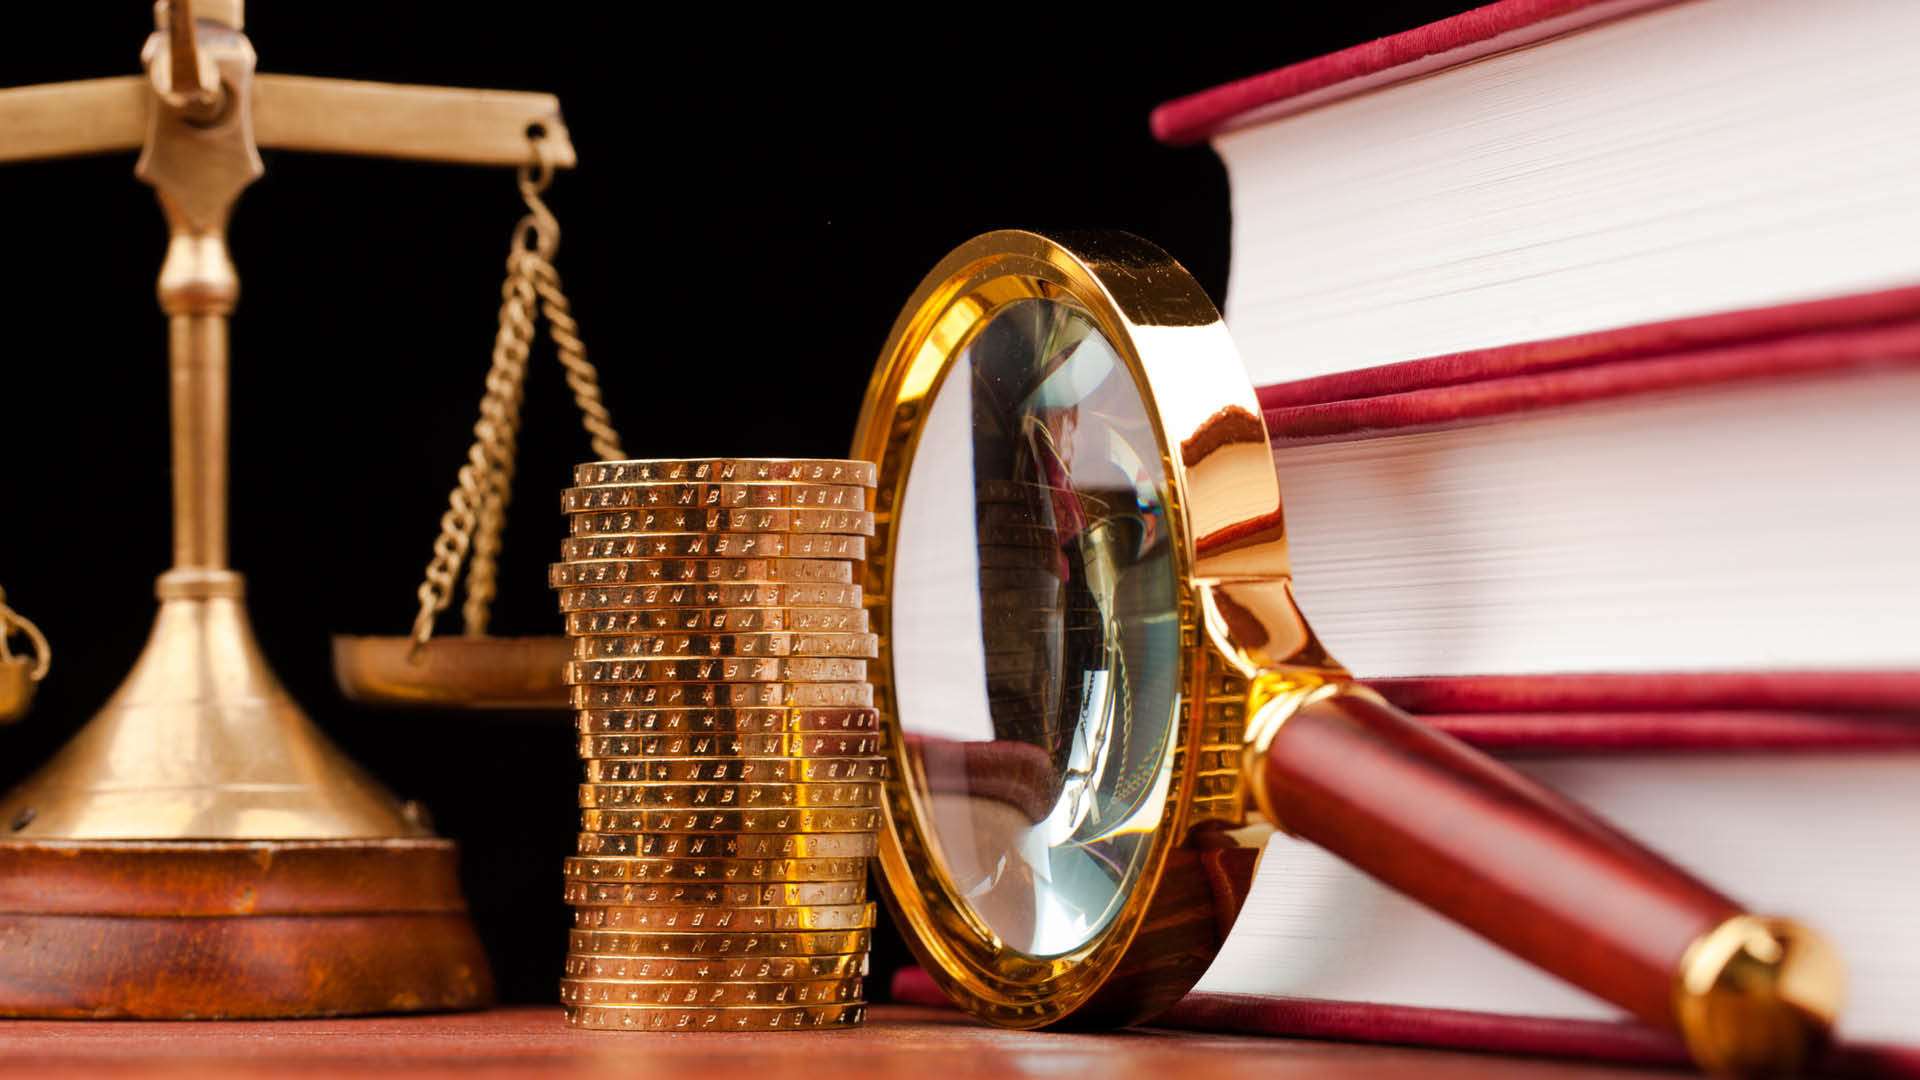 Magnifying glass, equal-arm balance, money, textbooks